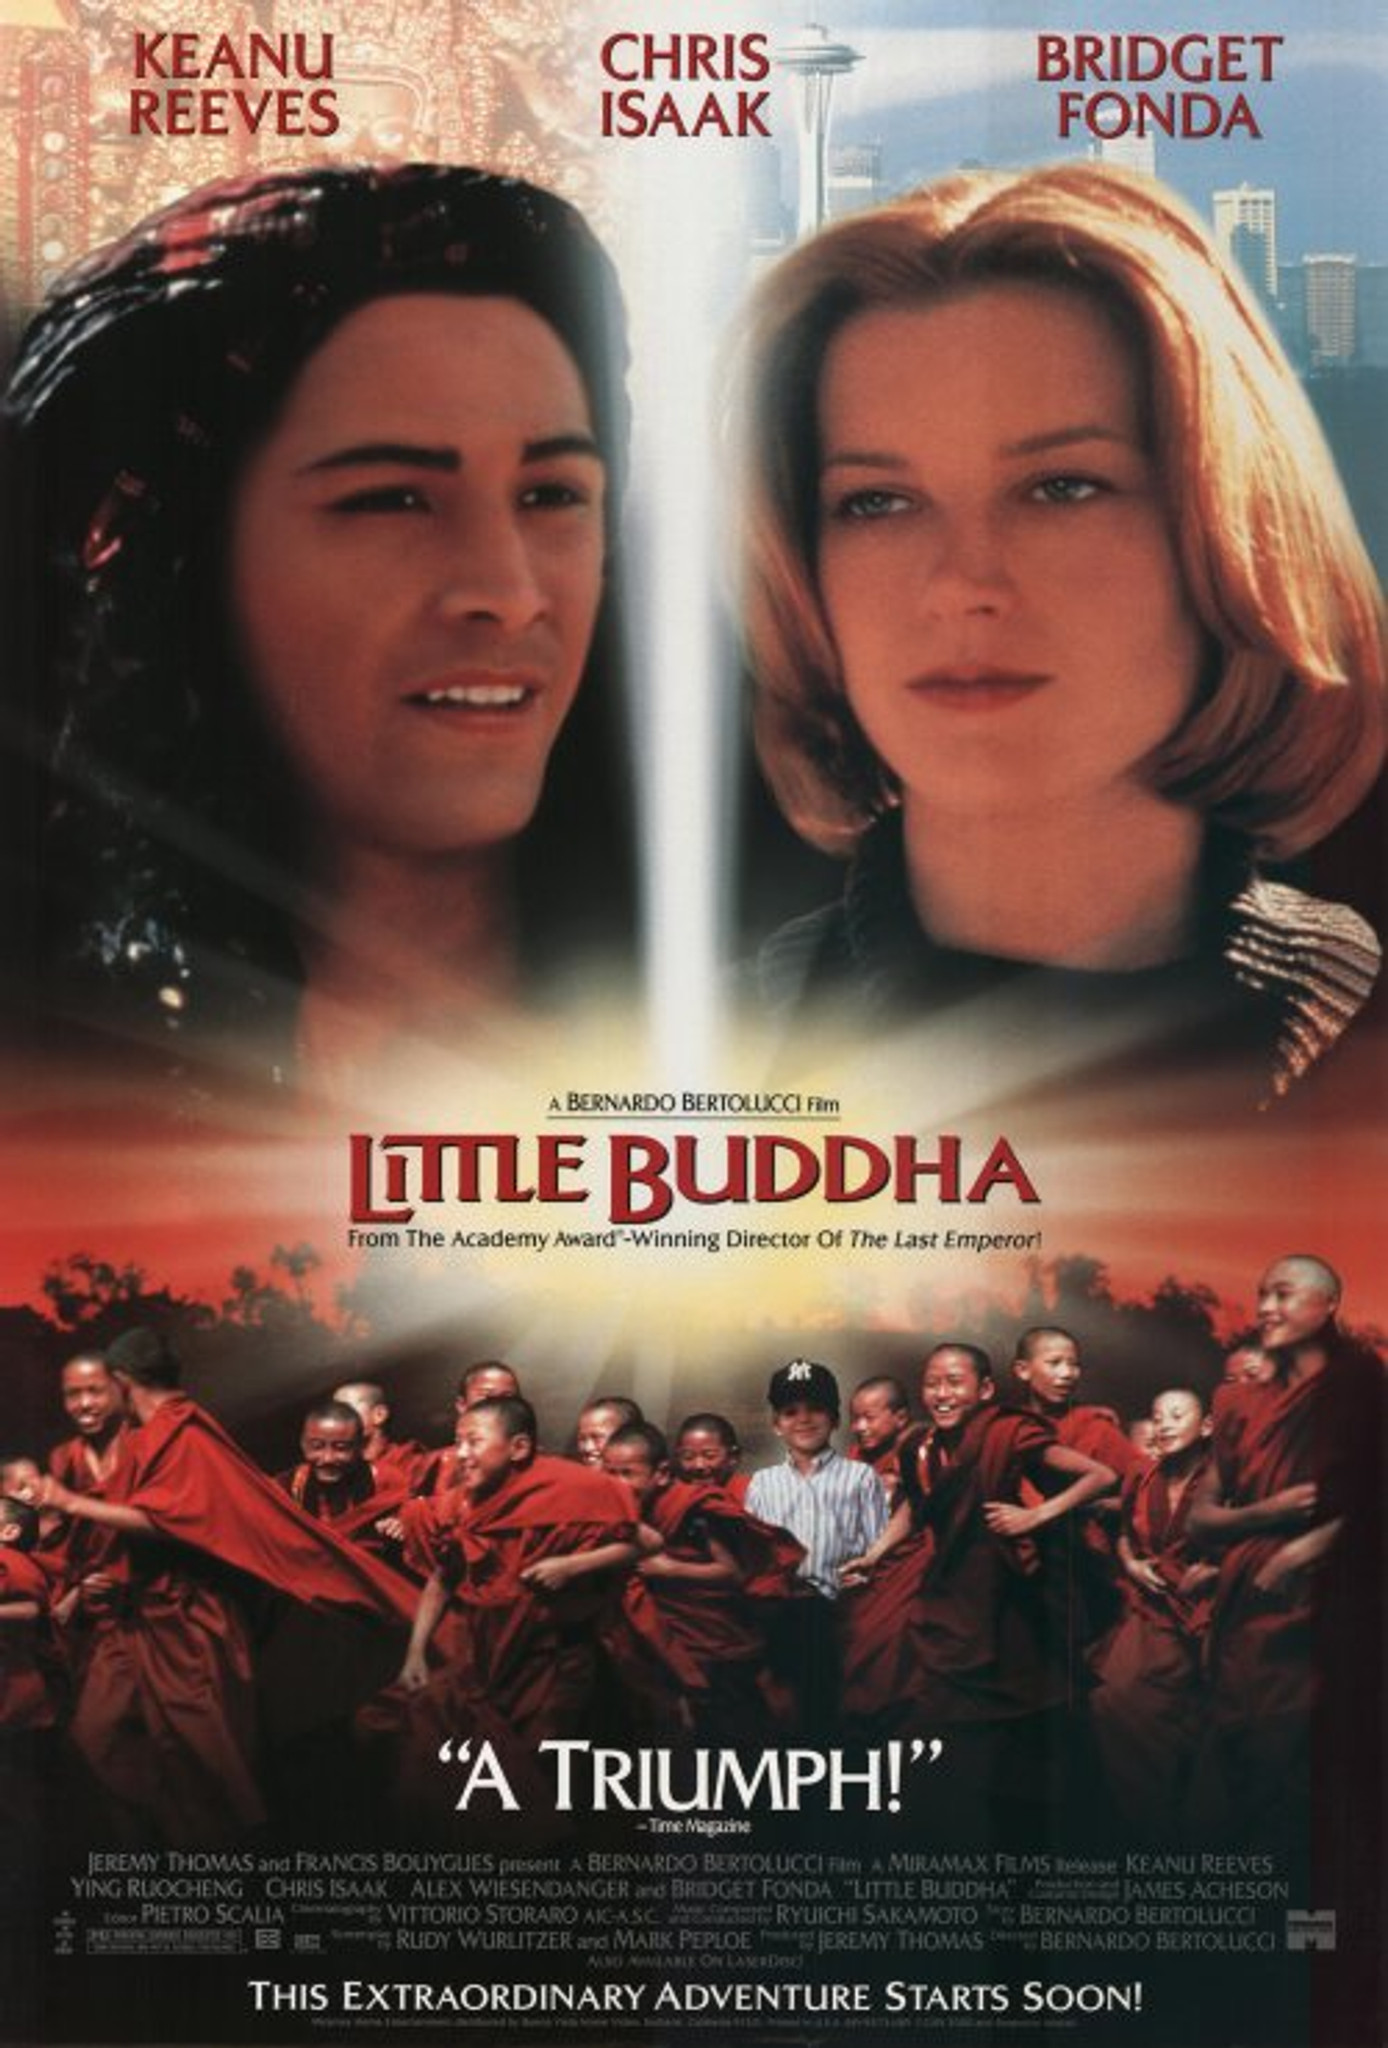 buddha reeves keanu 1994 DVD little